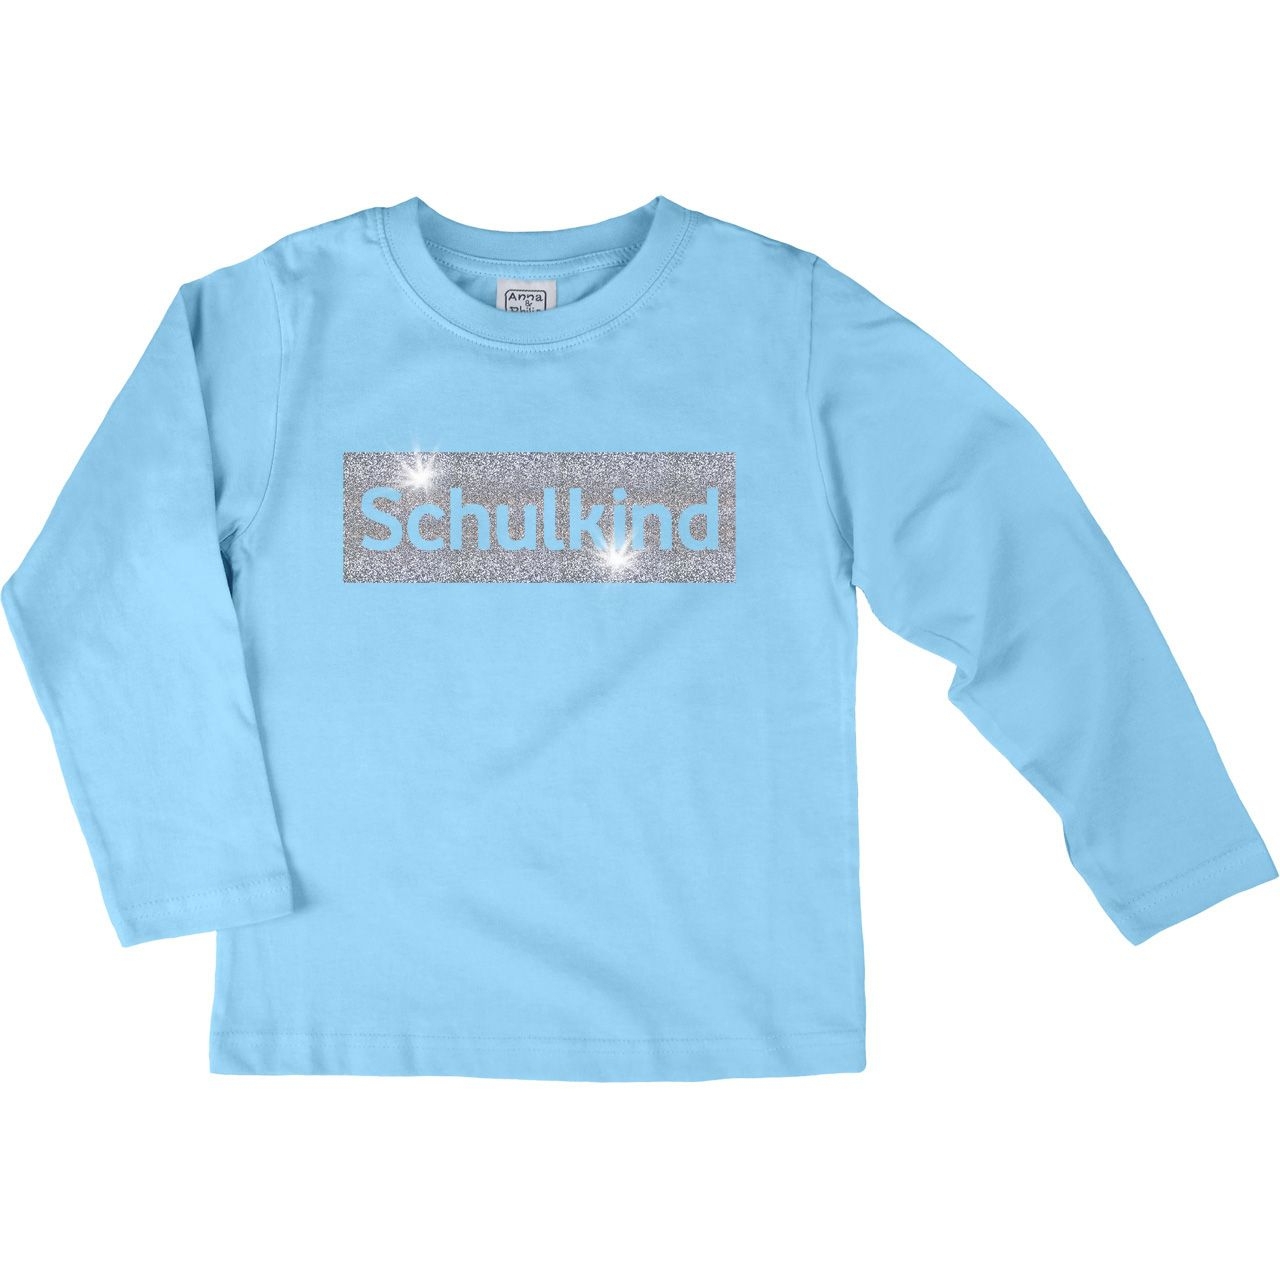 Schulkind Glitzer Kinder Langarm Shirt hellblau 122 / 128